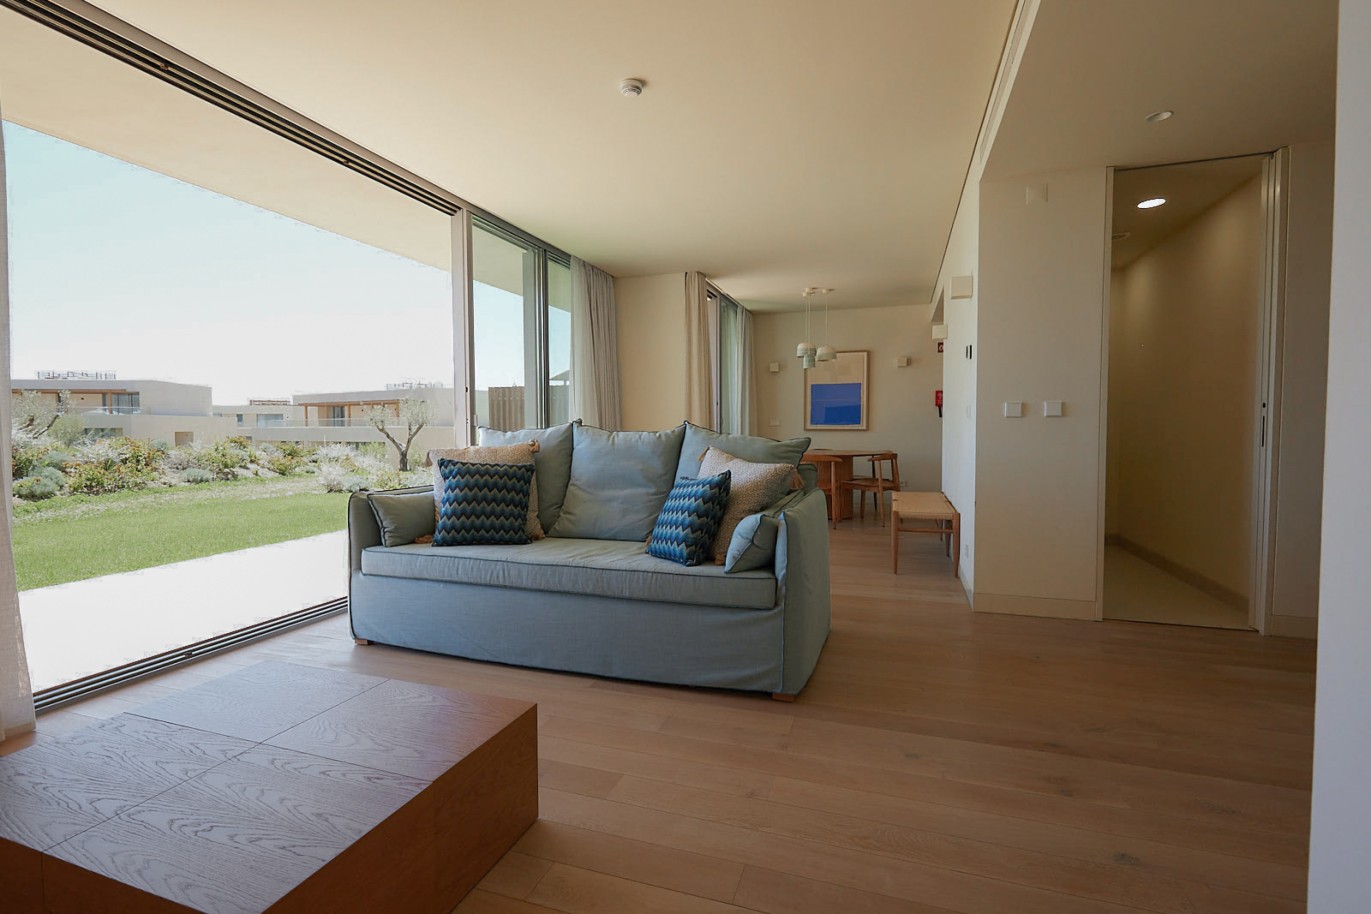 2 bedroom apartment in resort, for sale in Porches, Algarve_228887